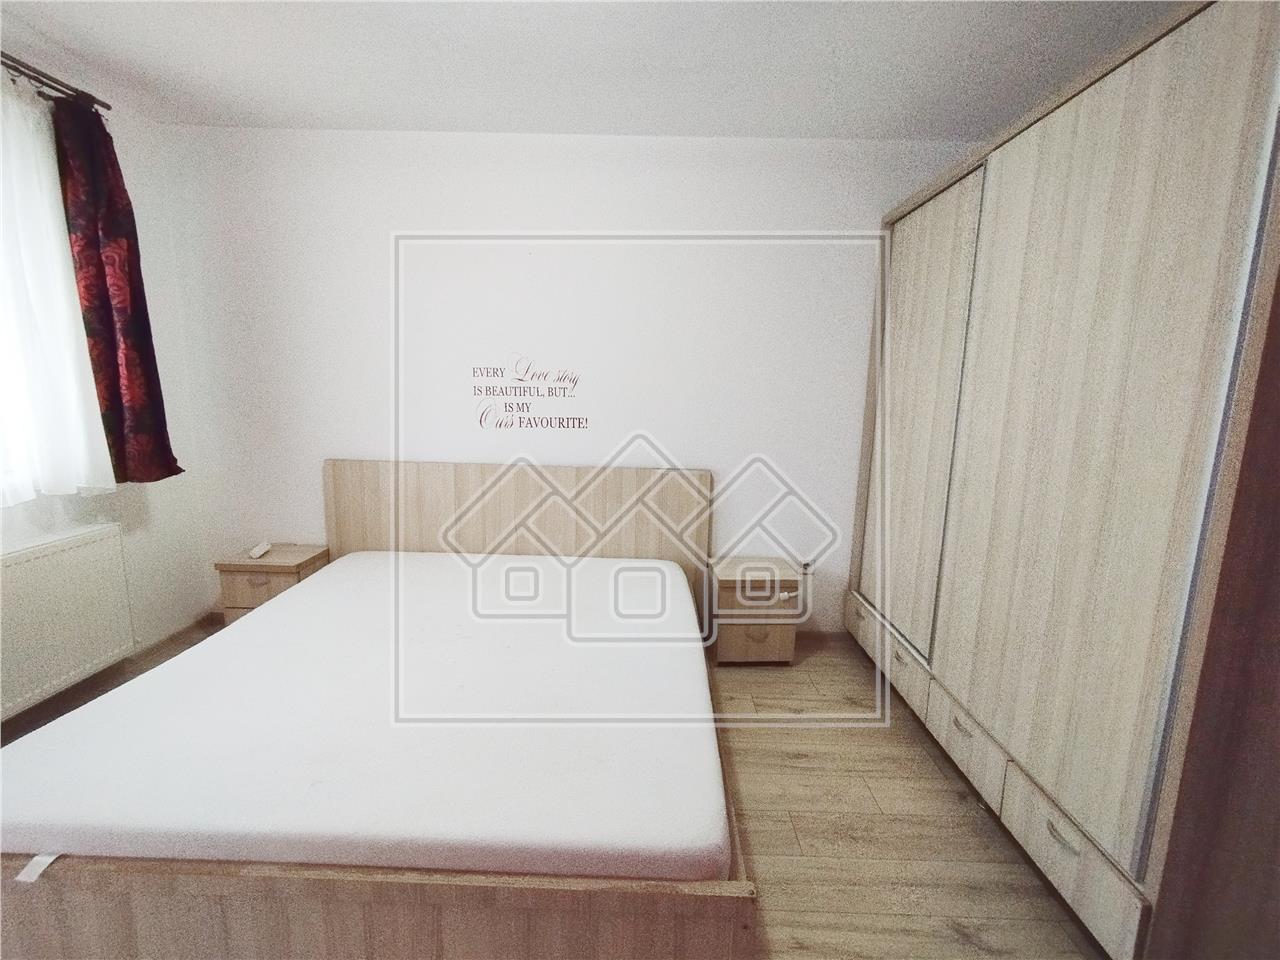 Apartament de inchiriat in Sibiu - 3 camere, 2 bai, garaj subteran